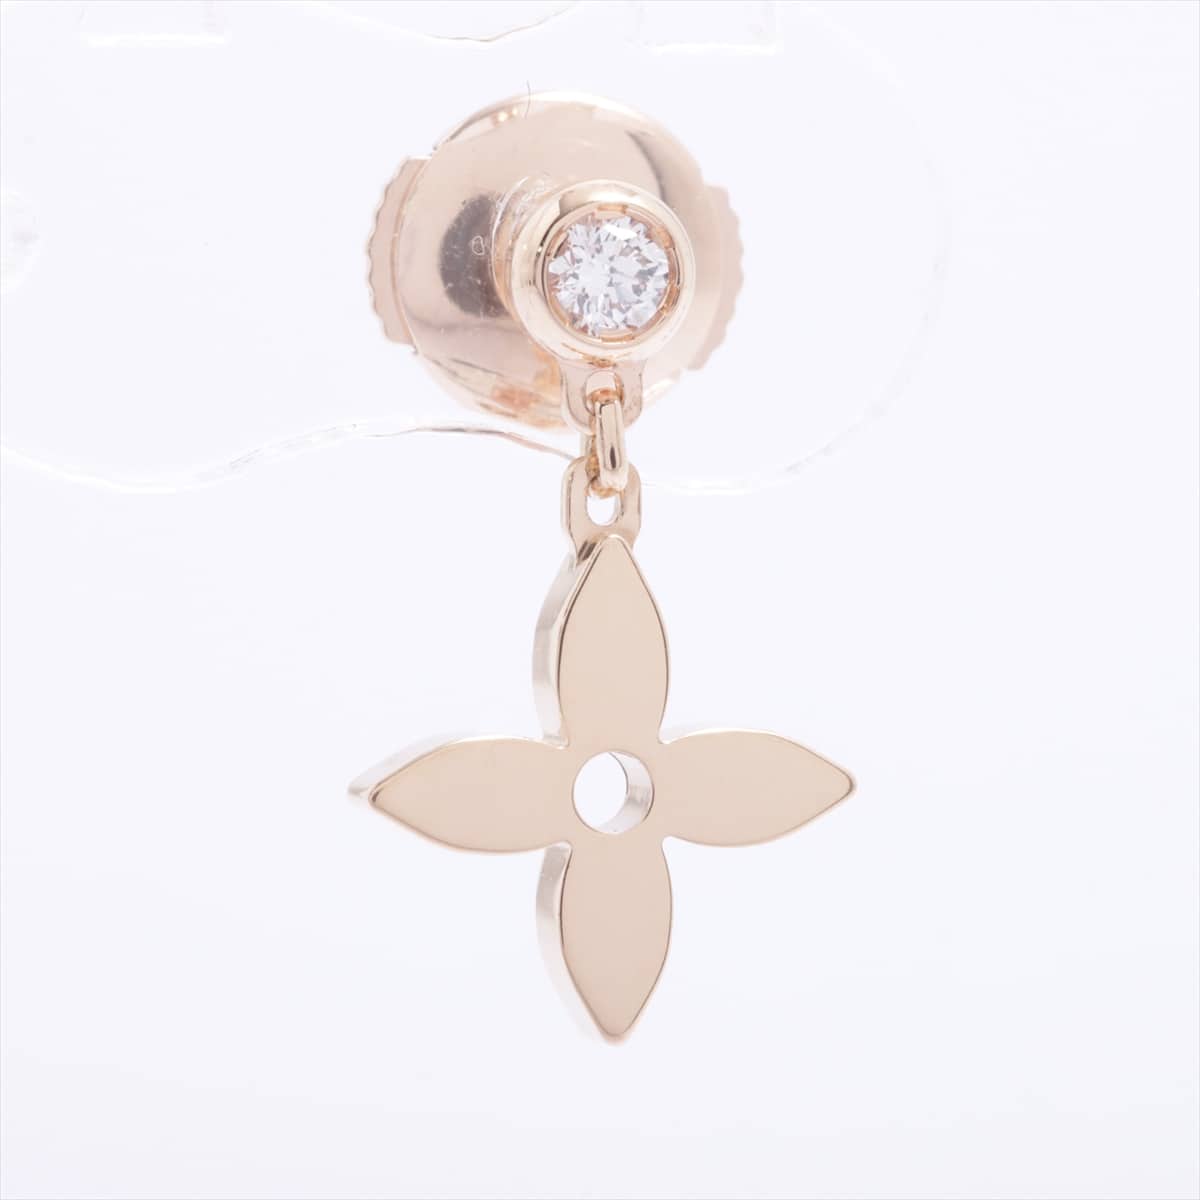 Louis Vuitton Puz Monogram Idylle diamond Piercing jewelry 750 PG 1.1g